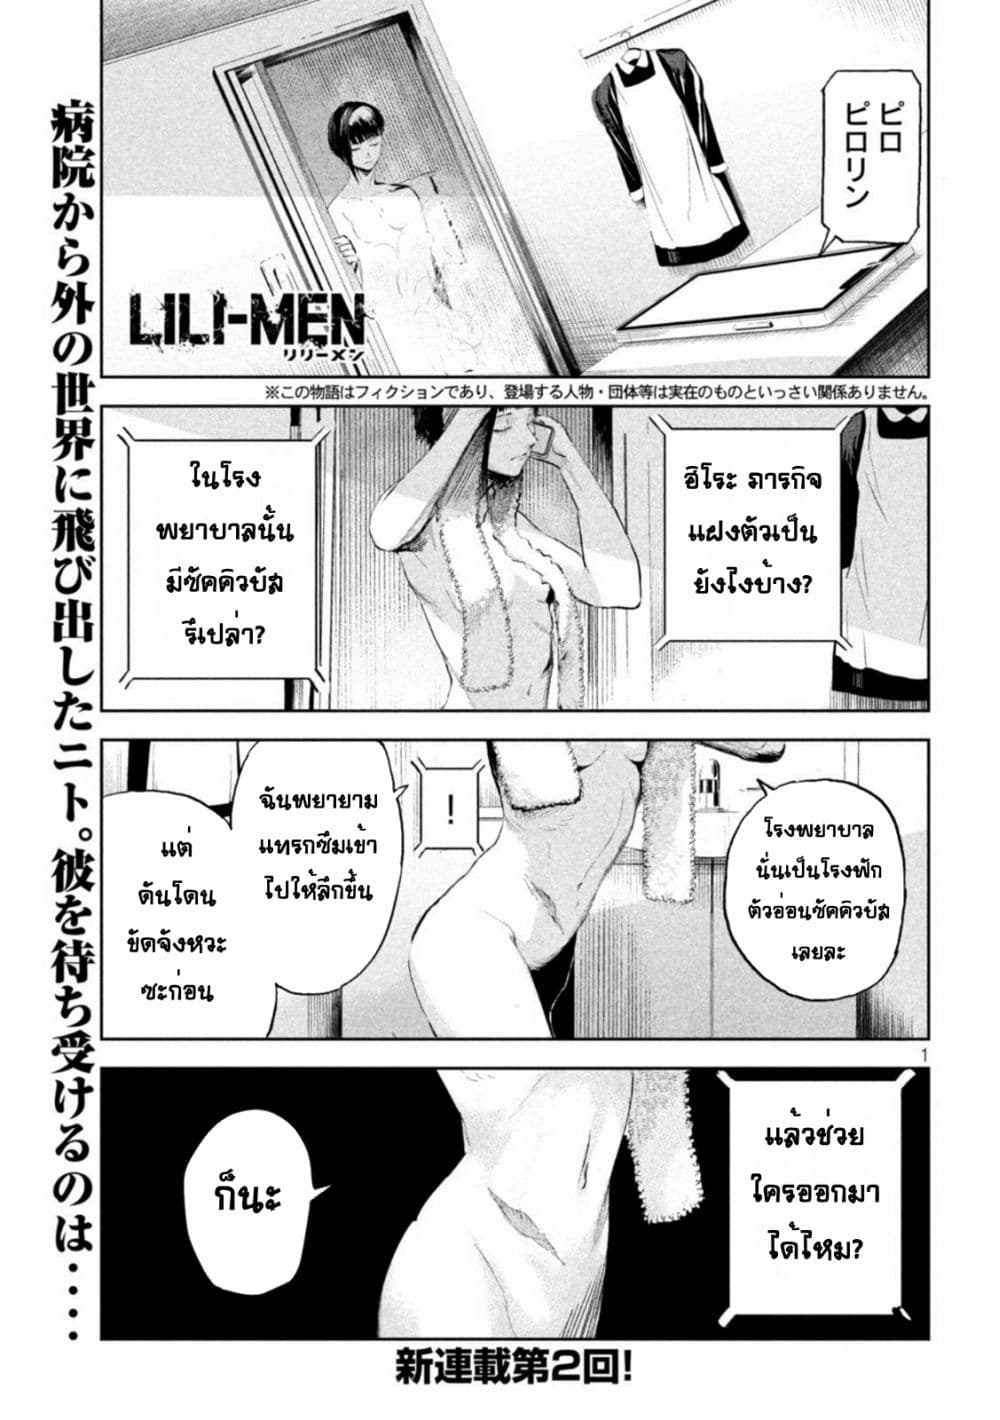 Lili-Men 2-2